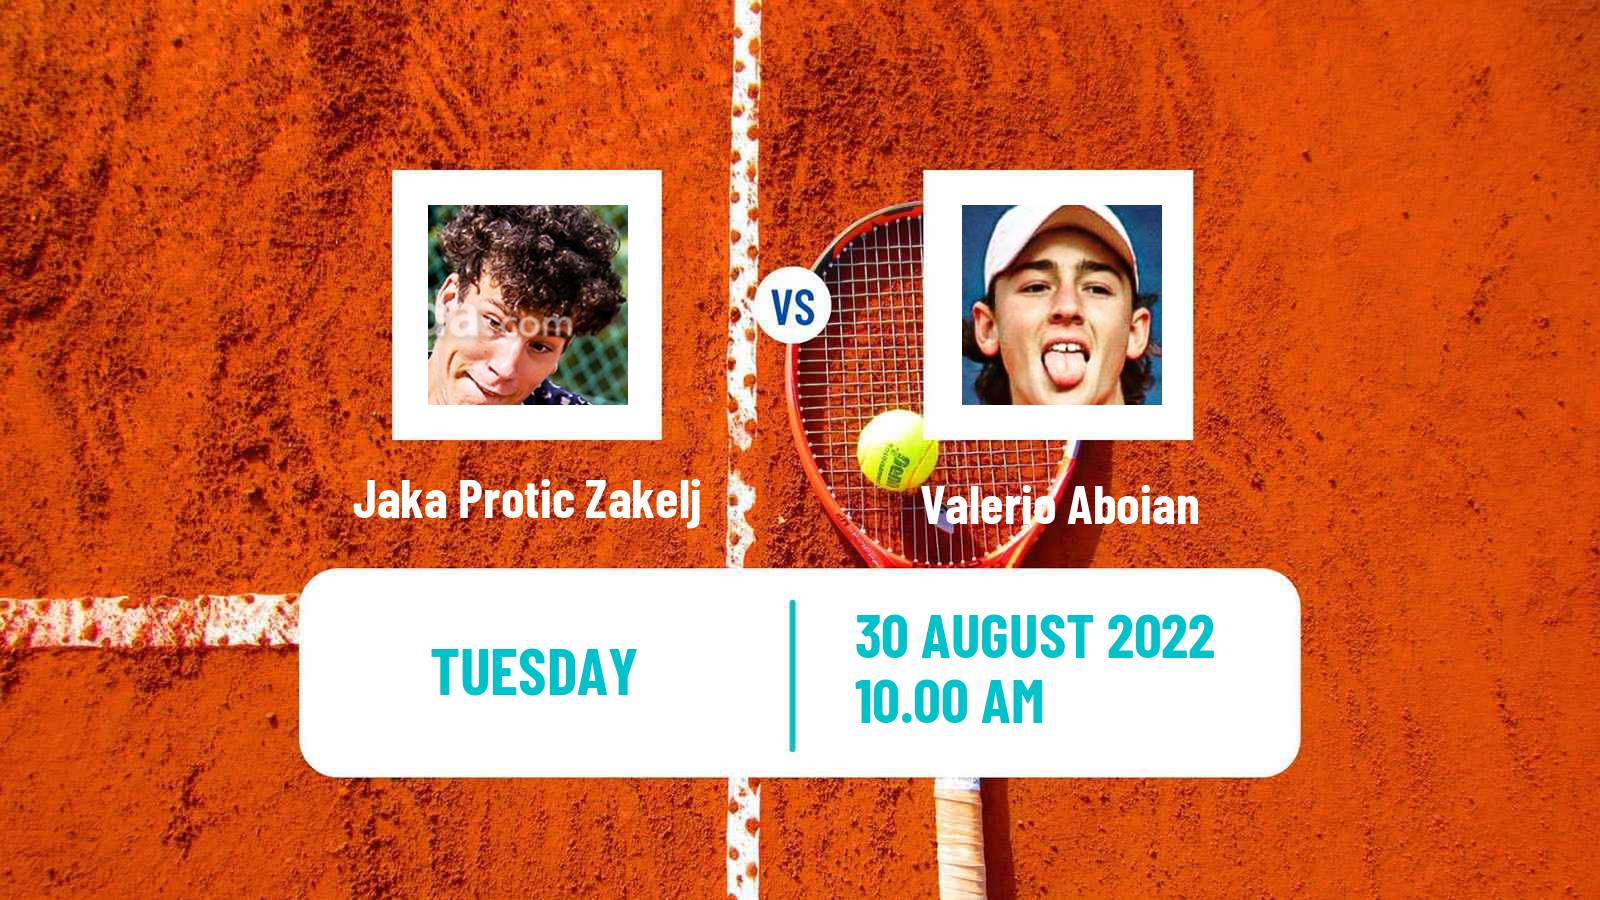 Tennis ITF Tournaments Jaka Protic Zakelj - Valerio Aboian